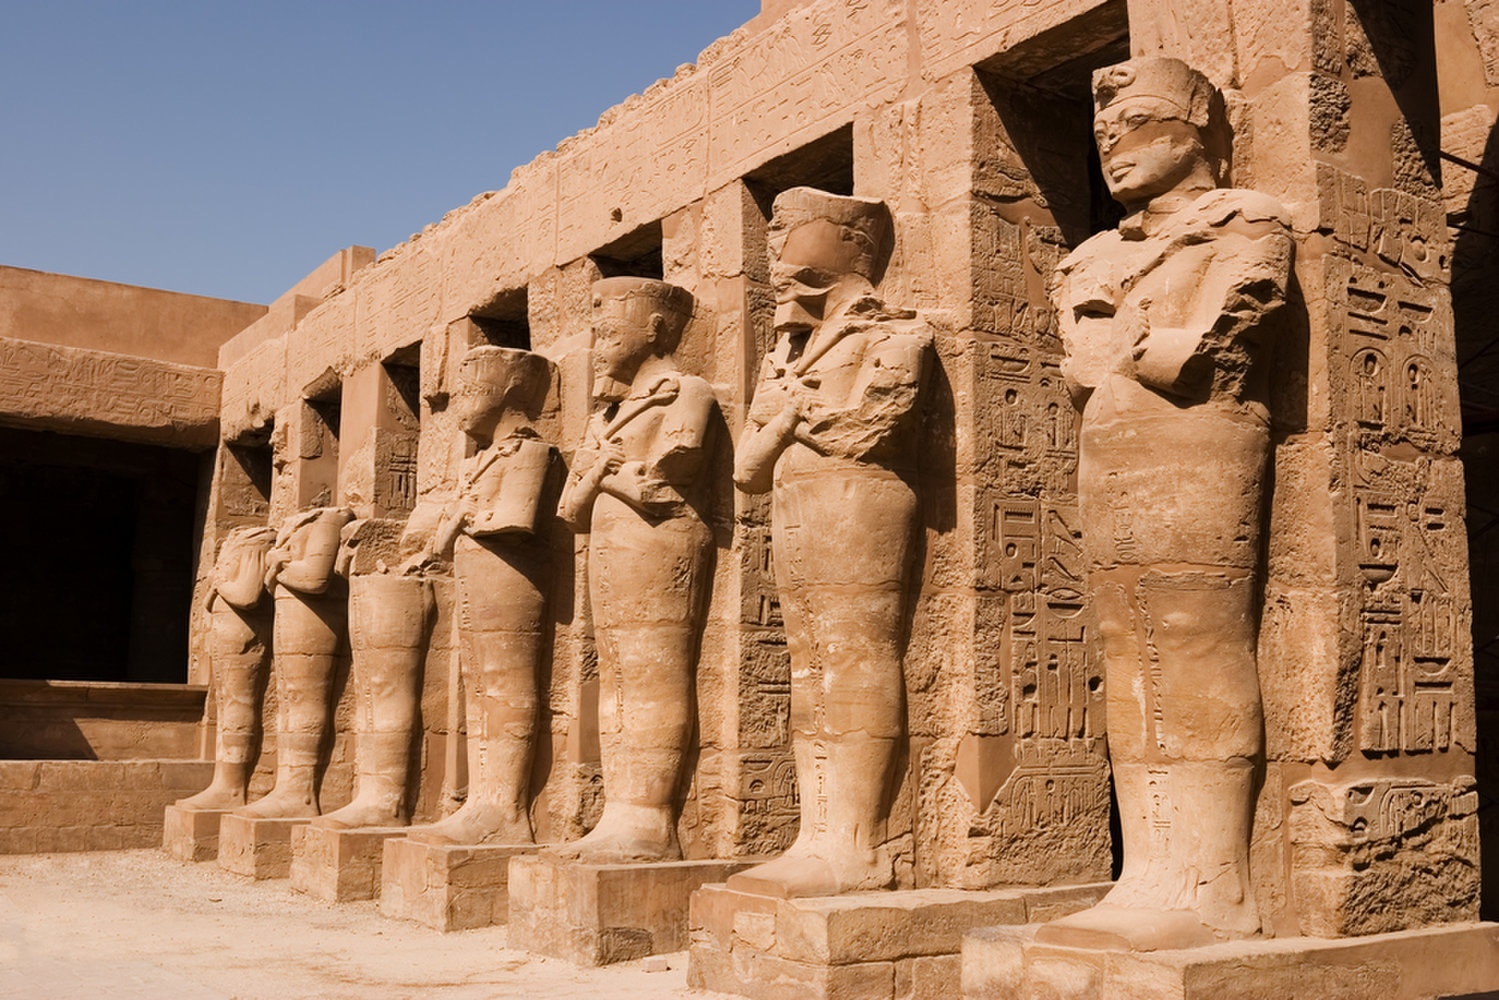 Statues of Ramses II as Osiris in Karnak Temple, Luxor (Thebes) Egypt.